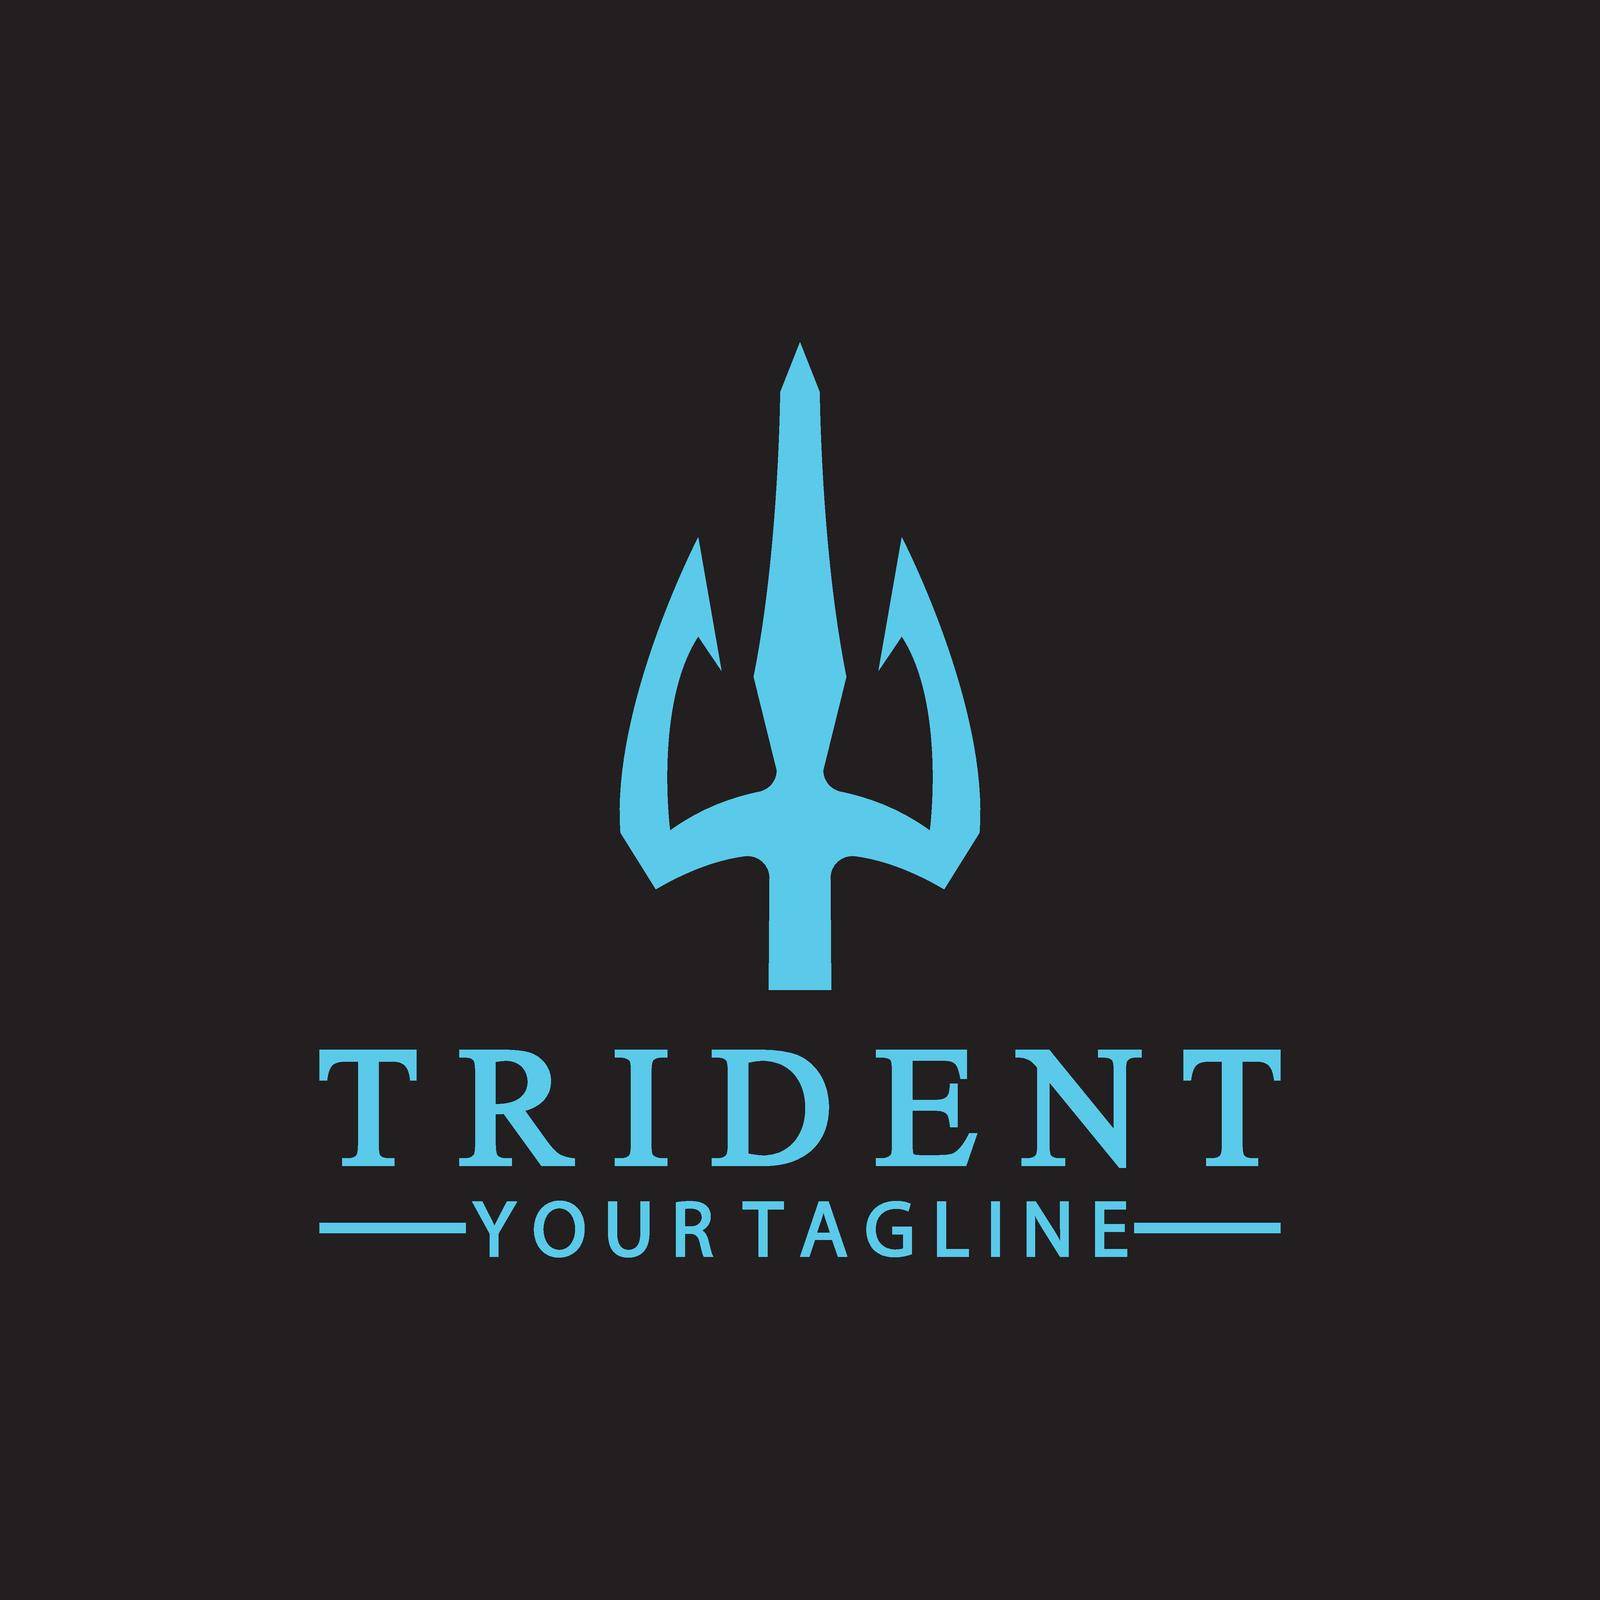 Vintage Trident Spear of Poseidon Neptune God Triton King logo design